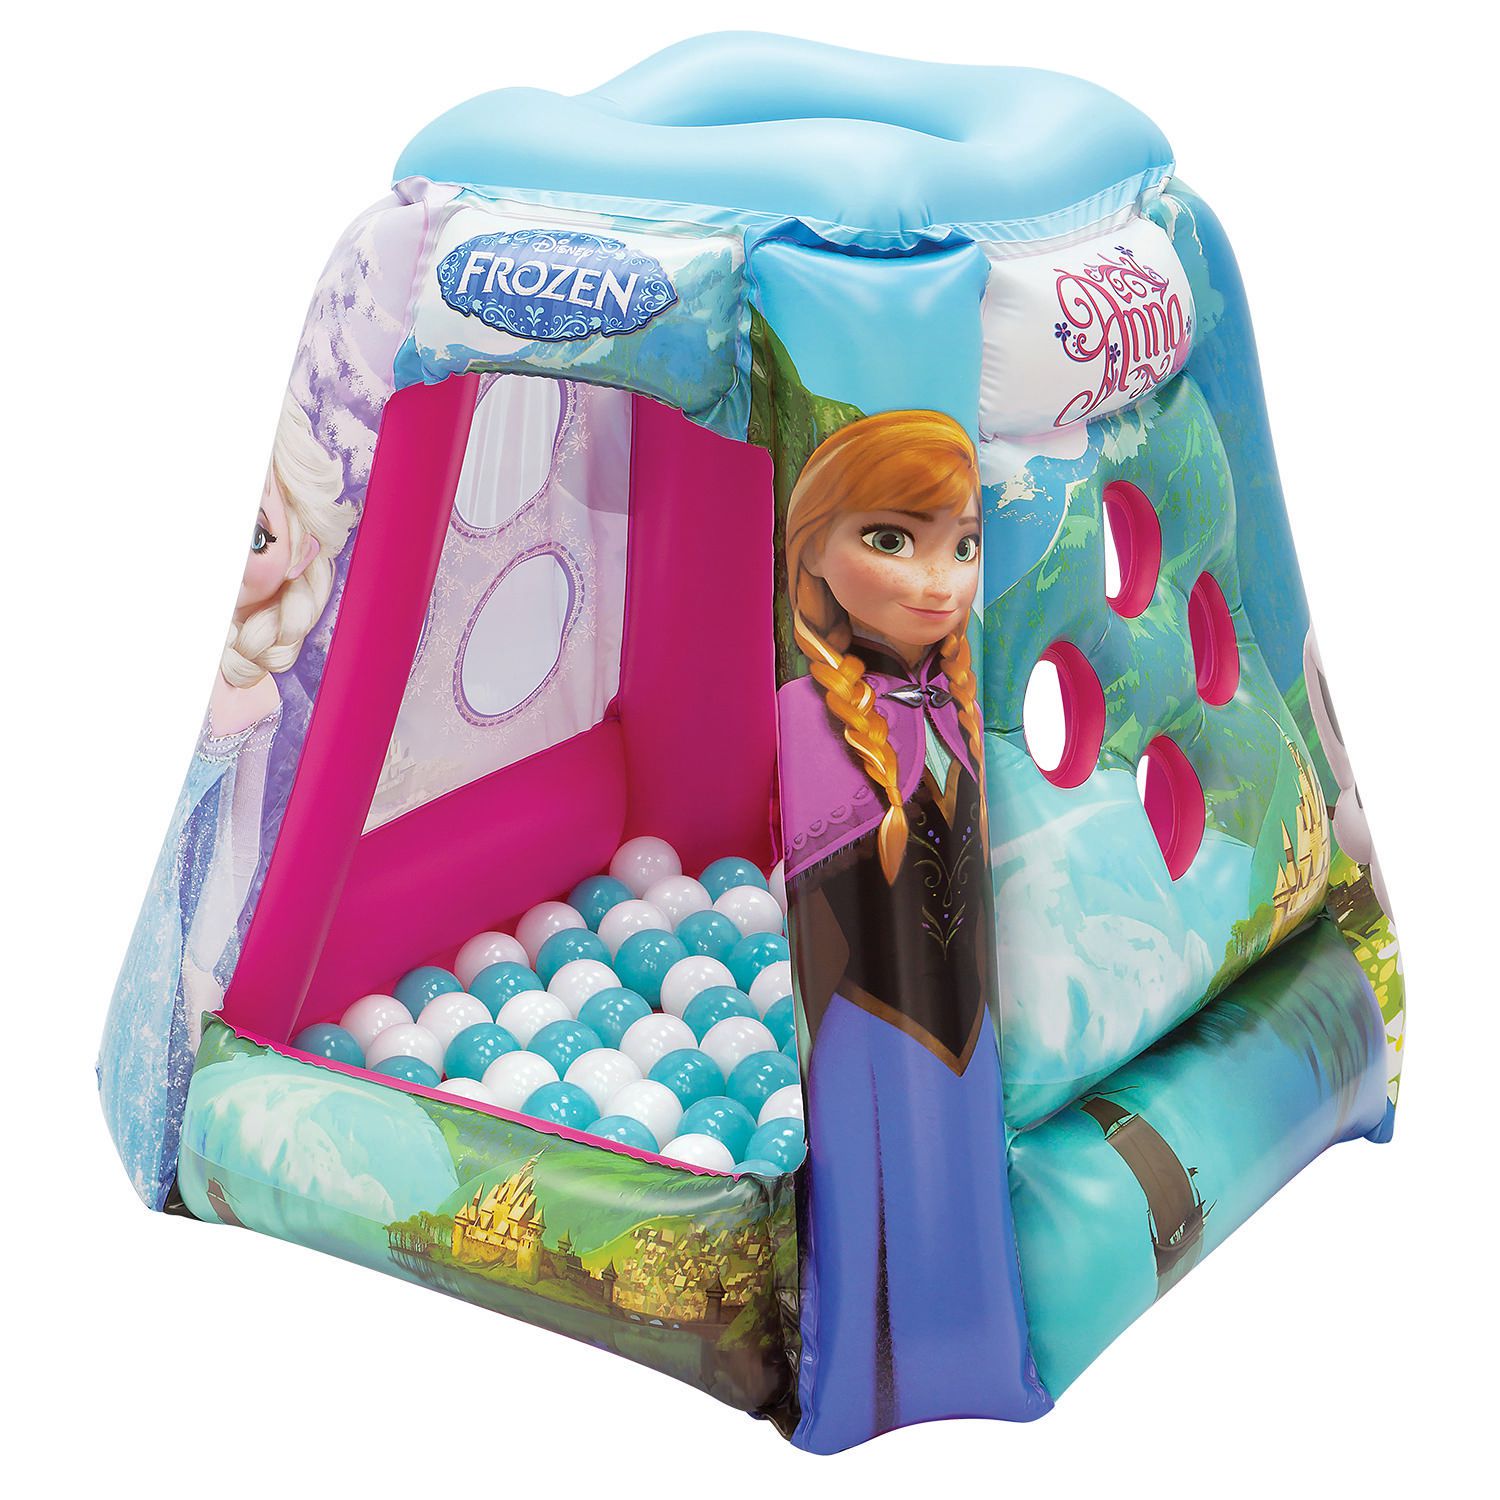 Frozen 2 Ball Pit Playland 1 Inflatable & 20 Soft-Flex Balls 